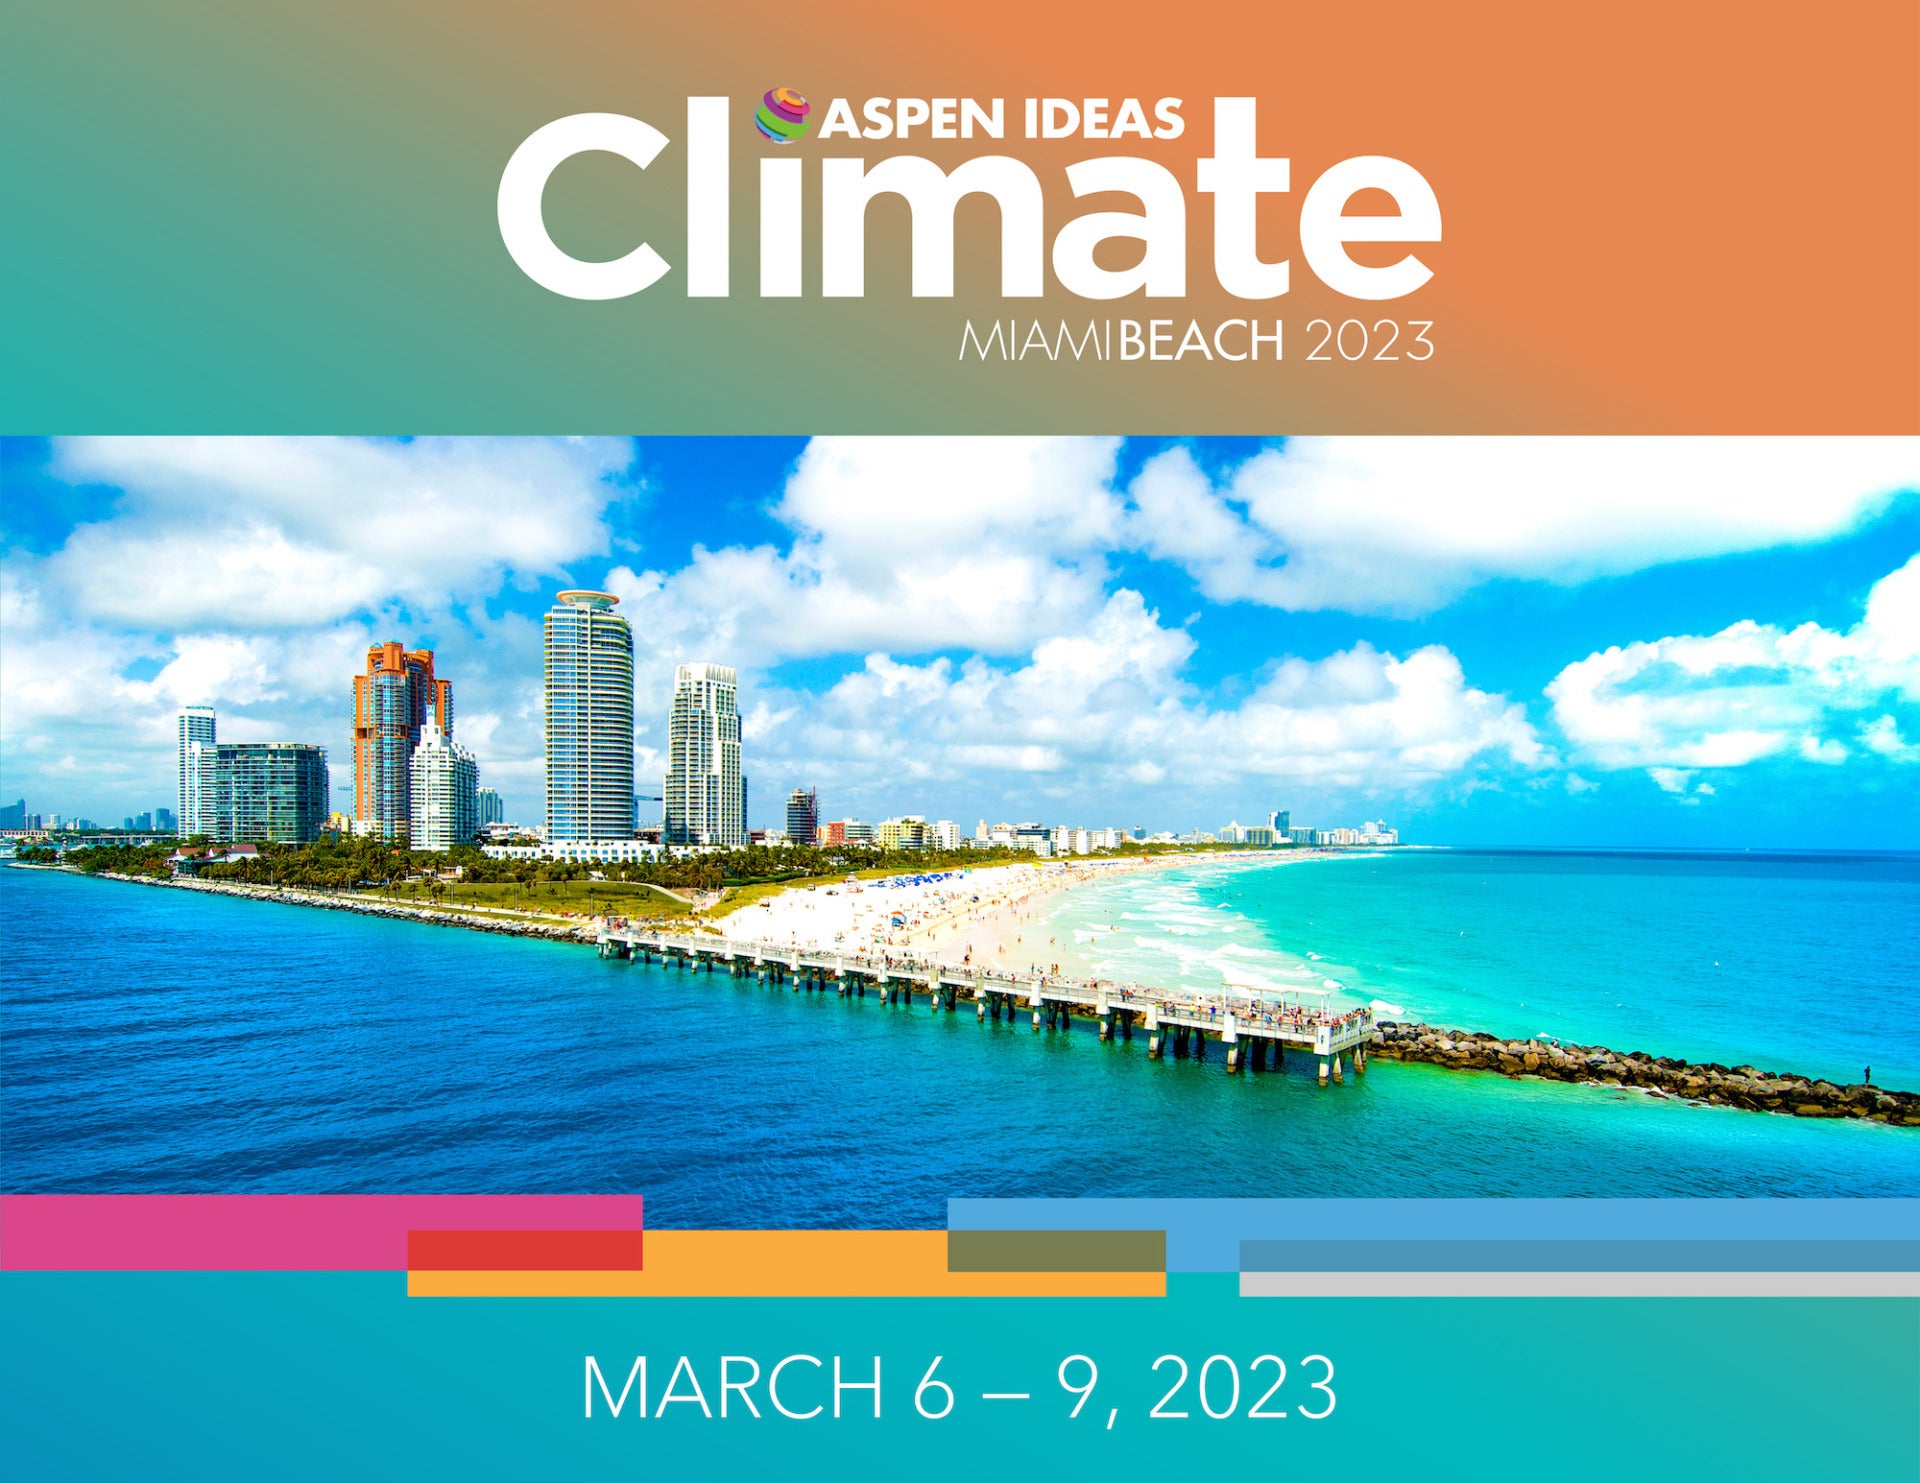 Aspen Ideas Climate Announces 2023 Programming Agenda Focused on